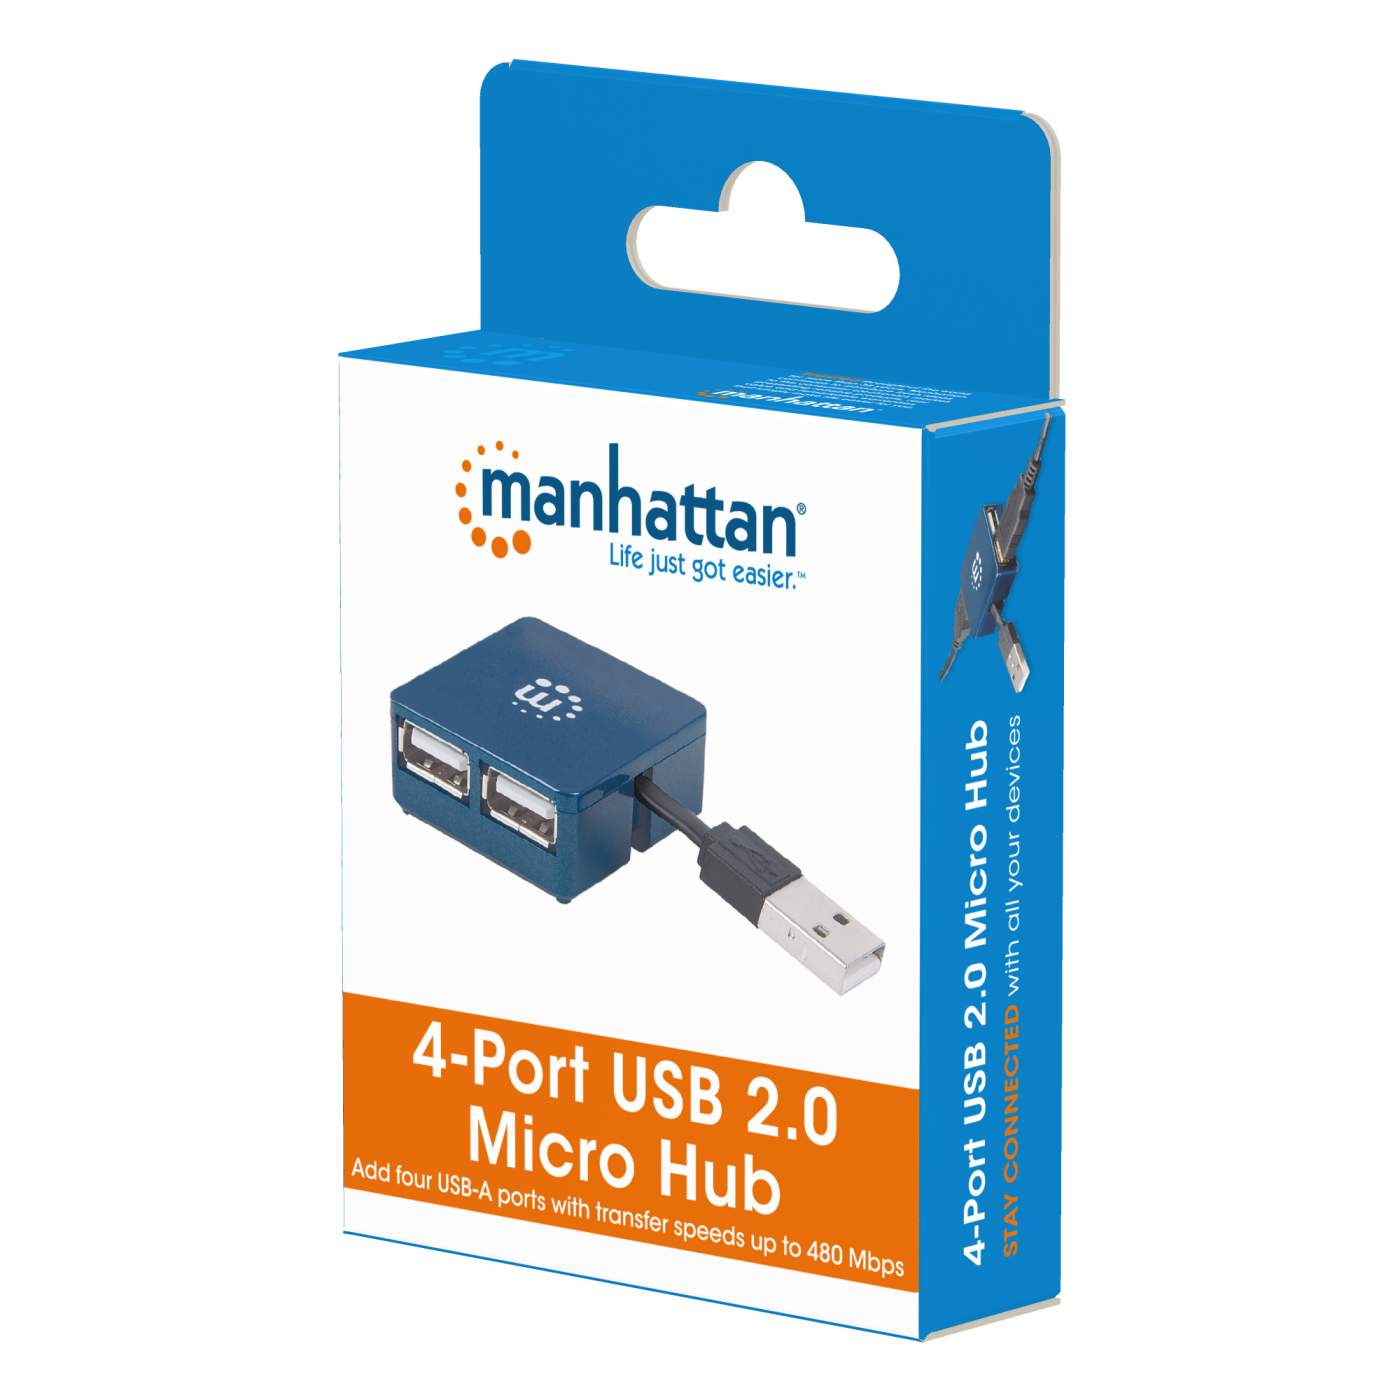 4-Port USB 2.0 Micro Hub Packaging Image 2